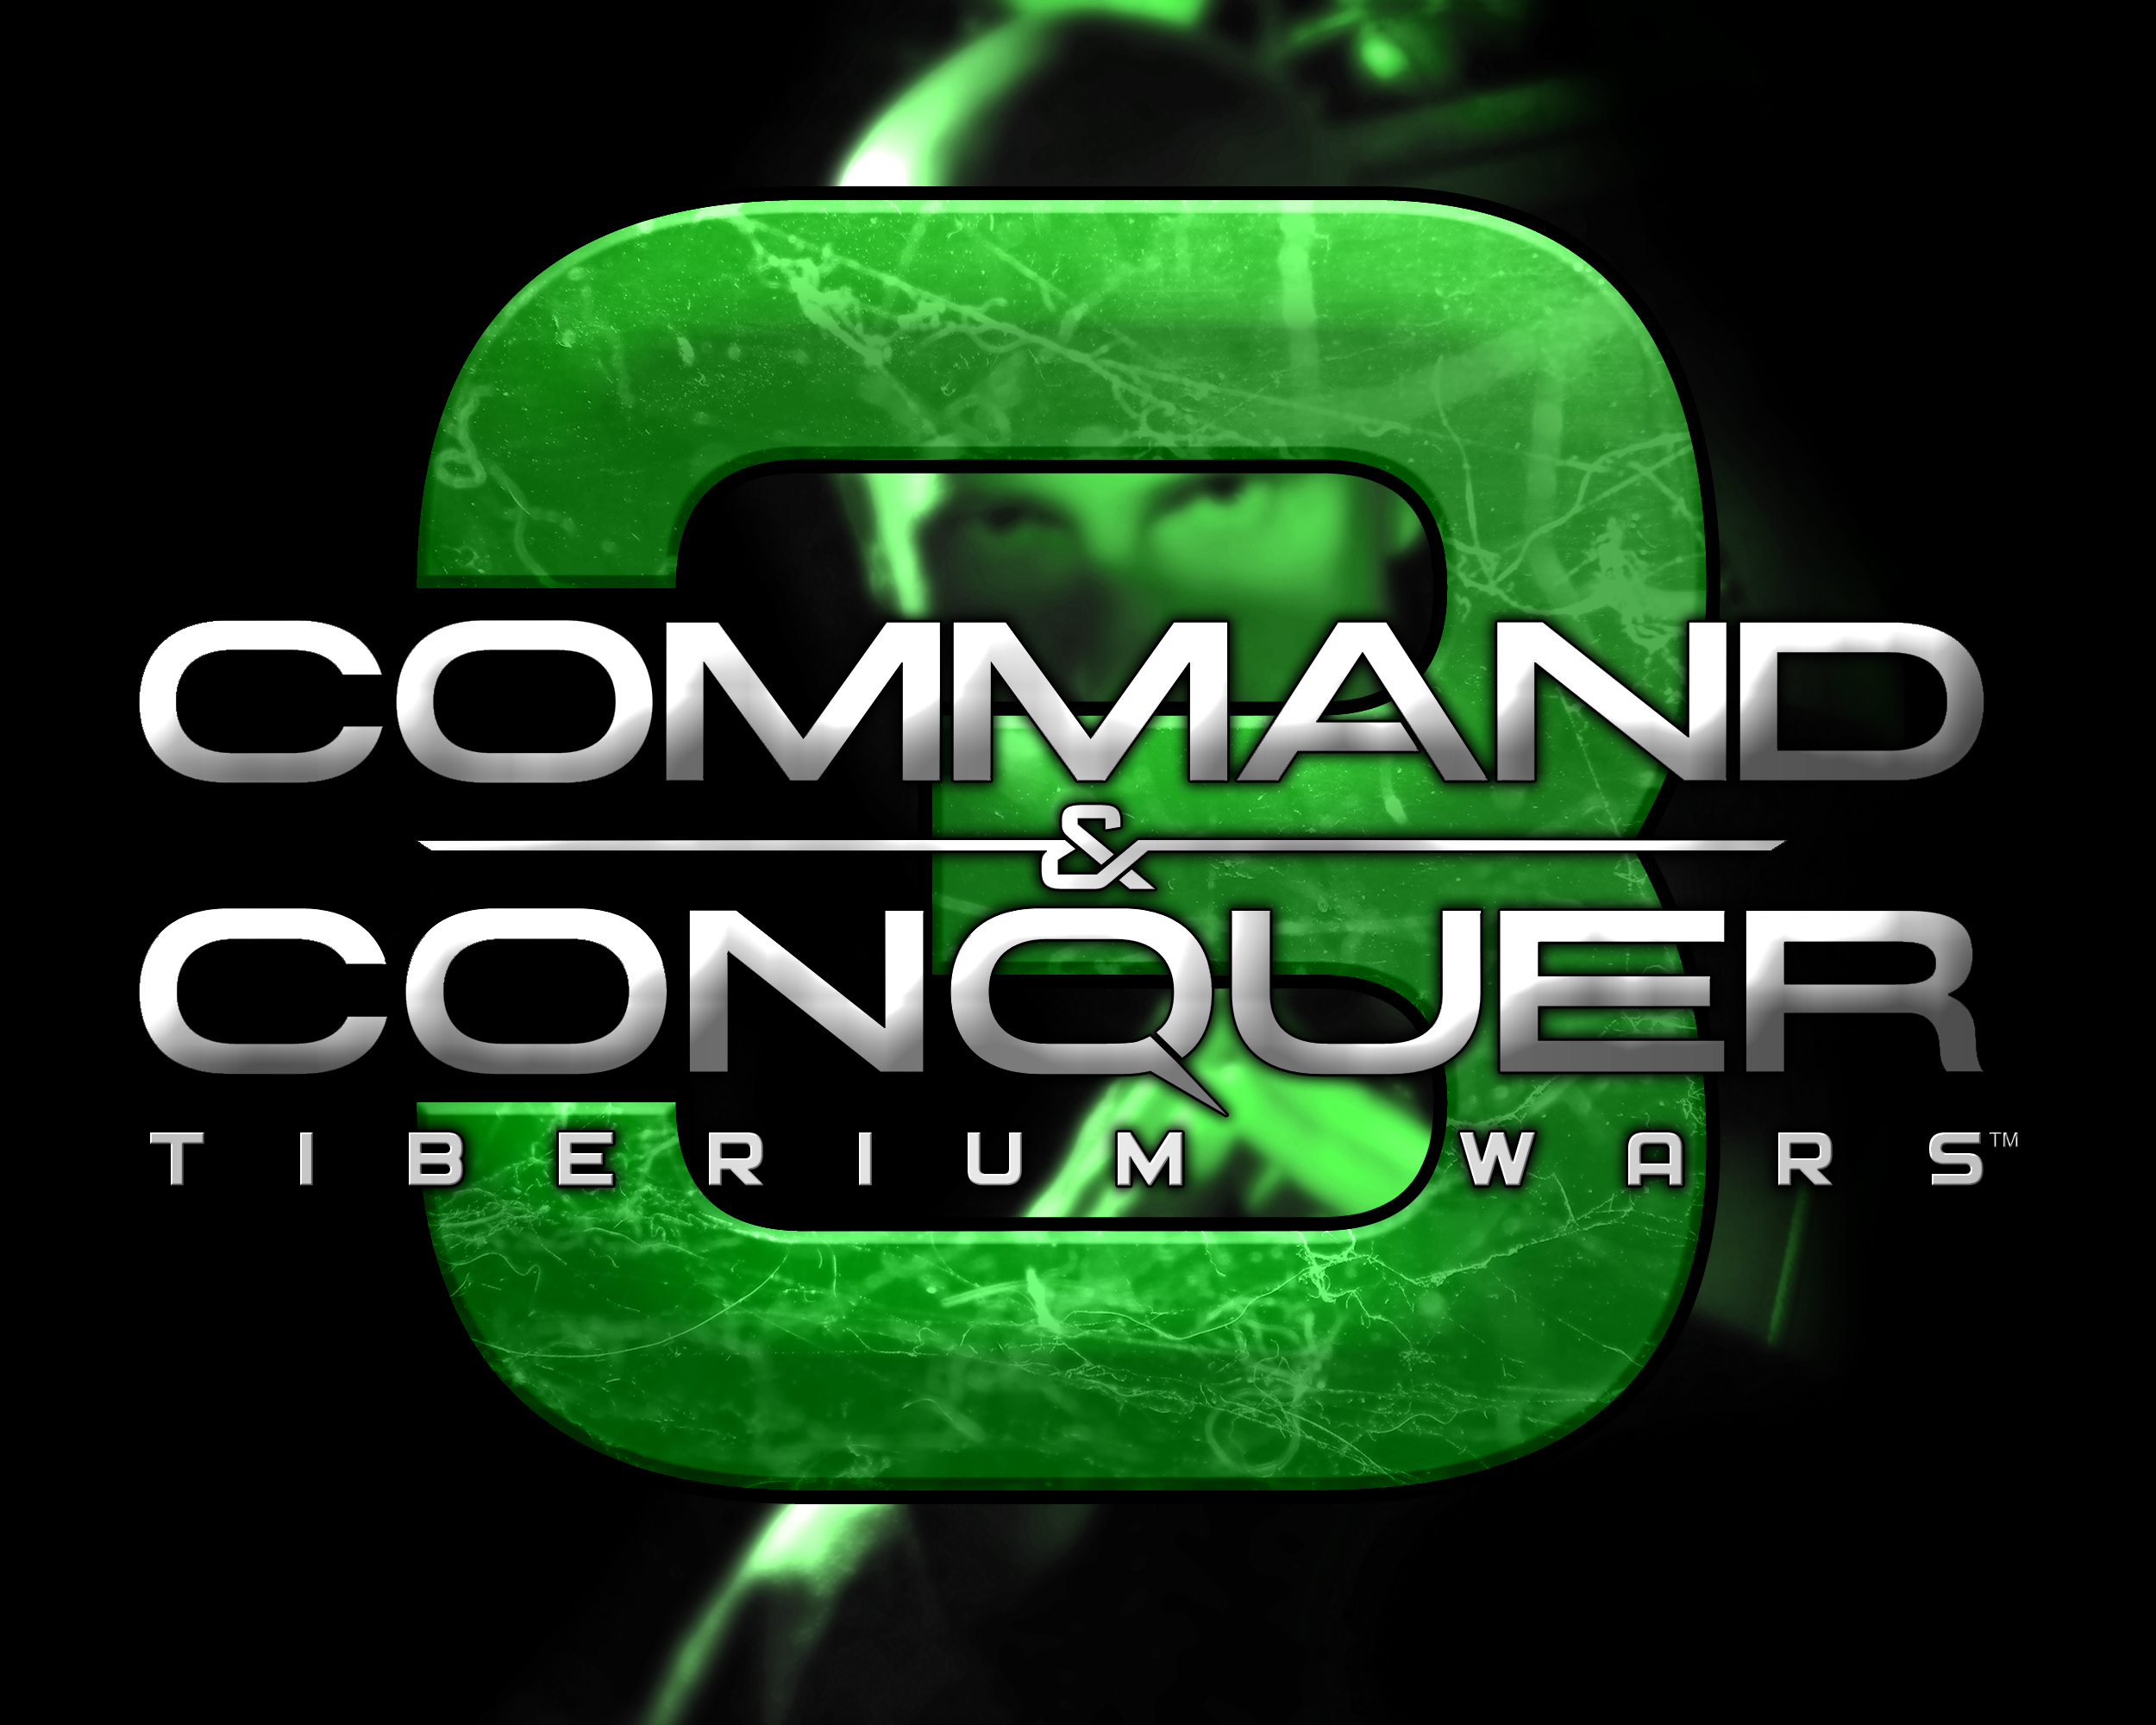 Command And Conquer 3 Tiberium Wars | НОД | Шестисторонняя перестрелка